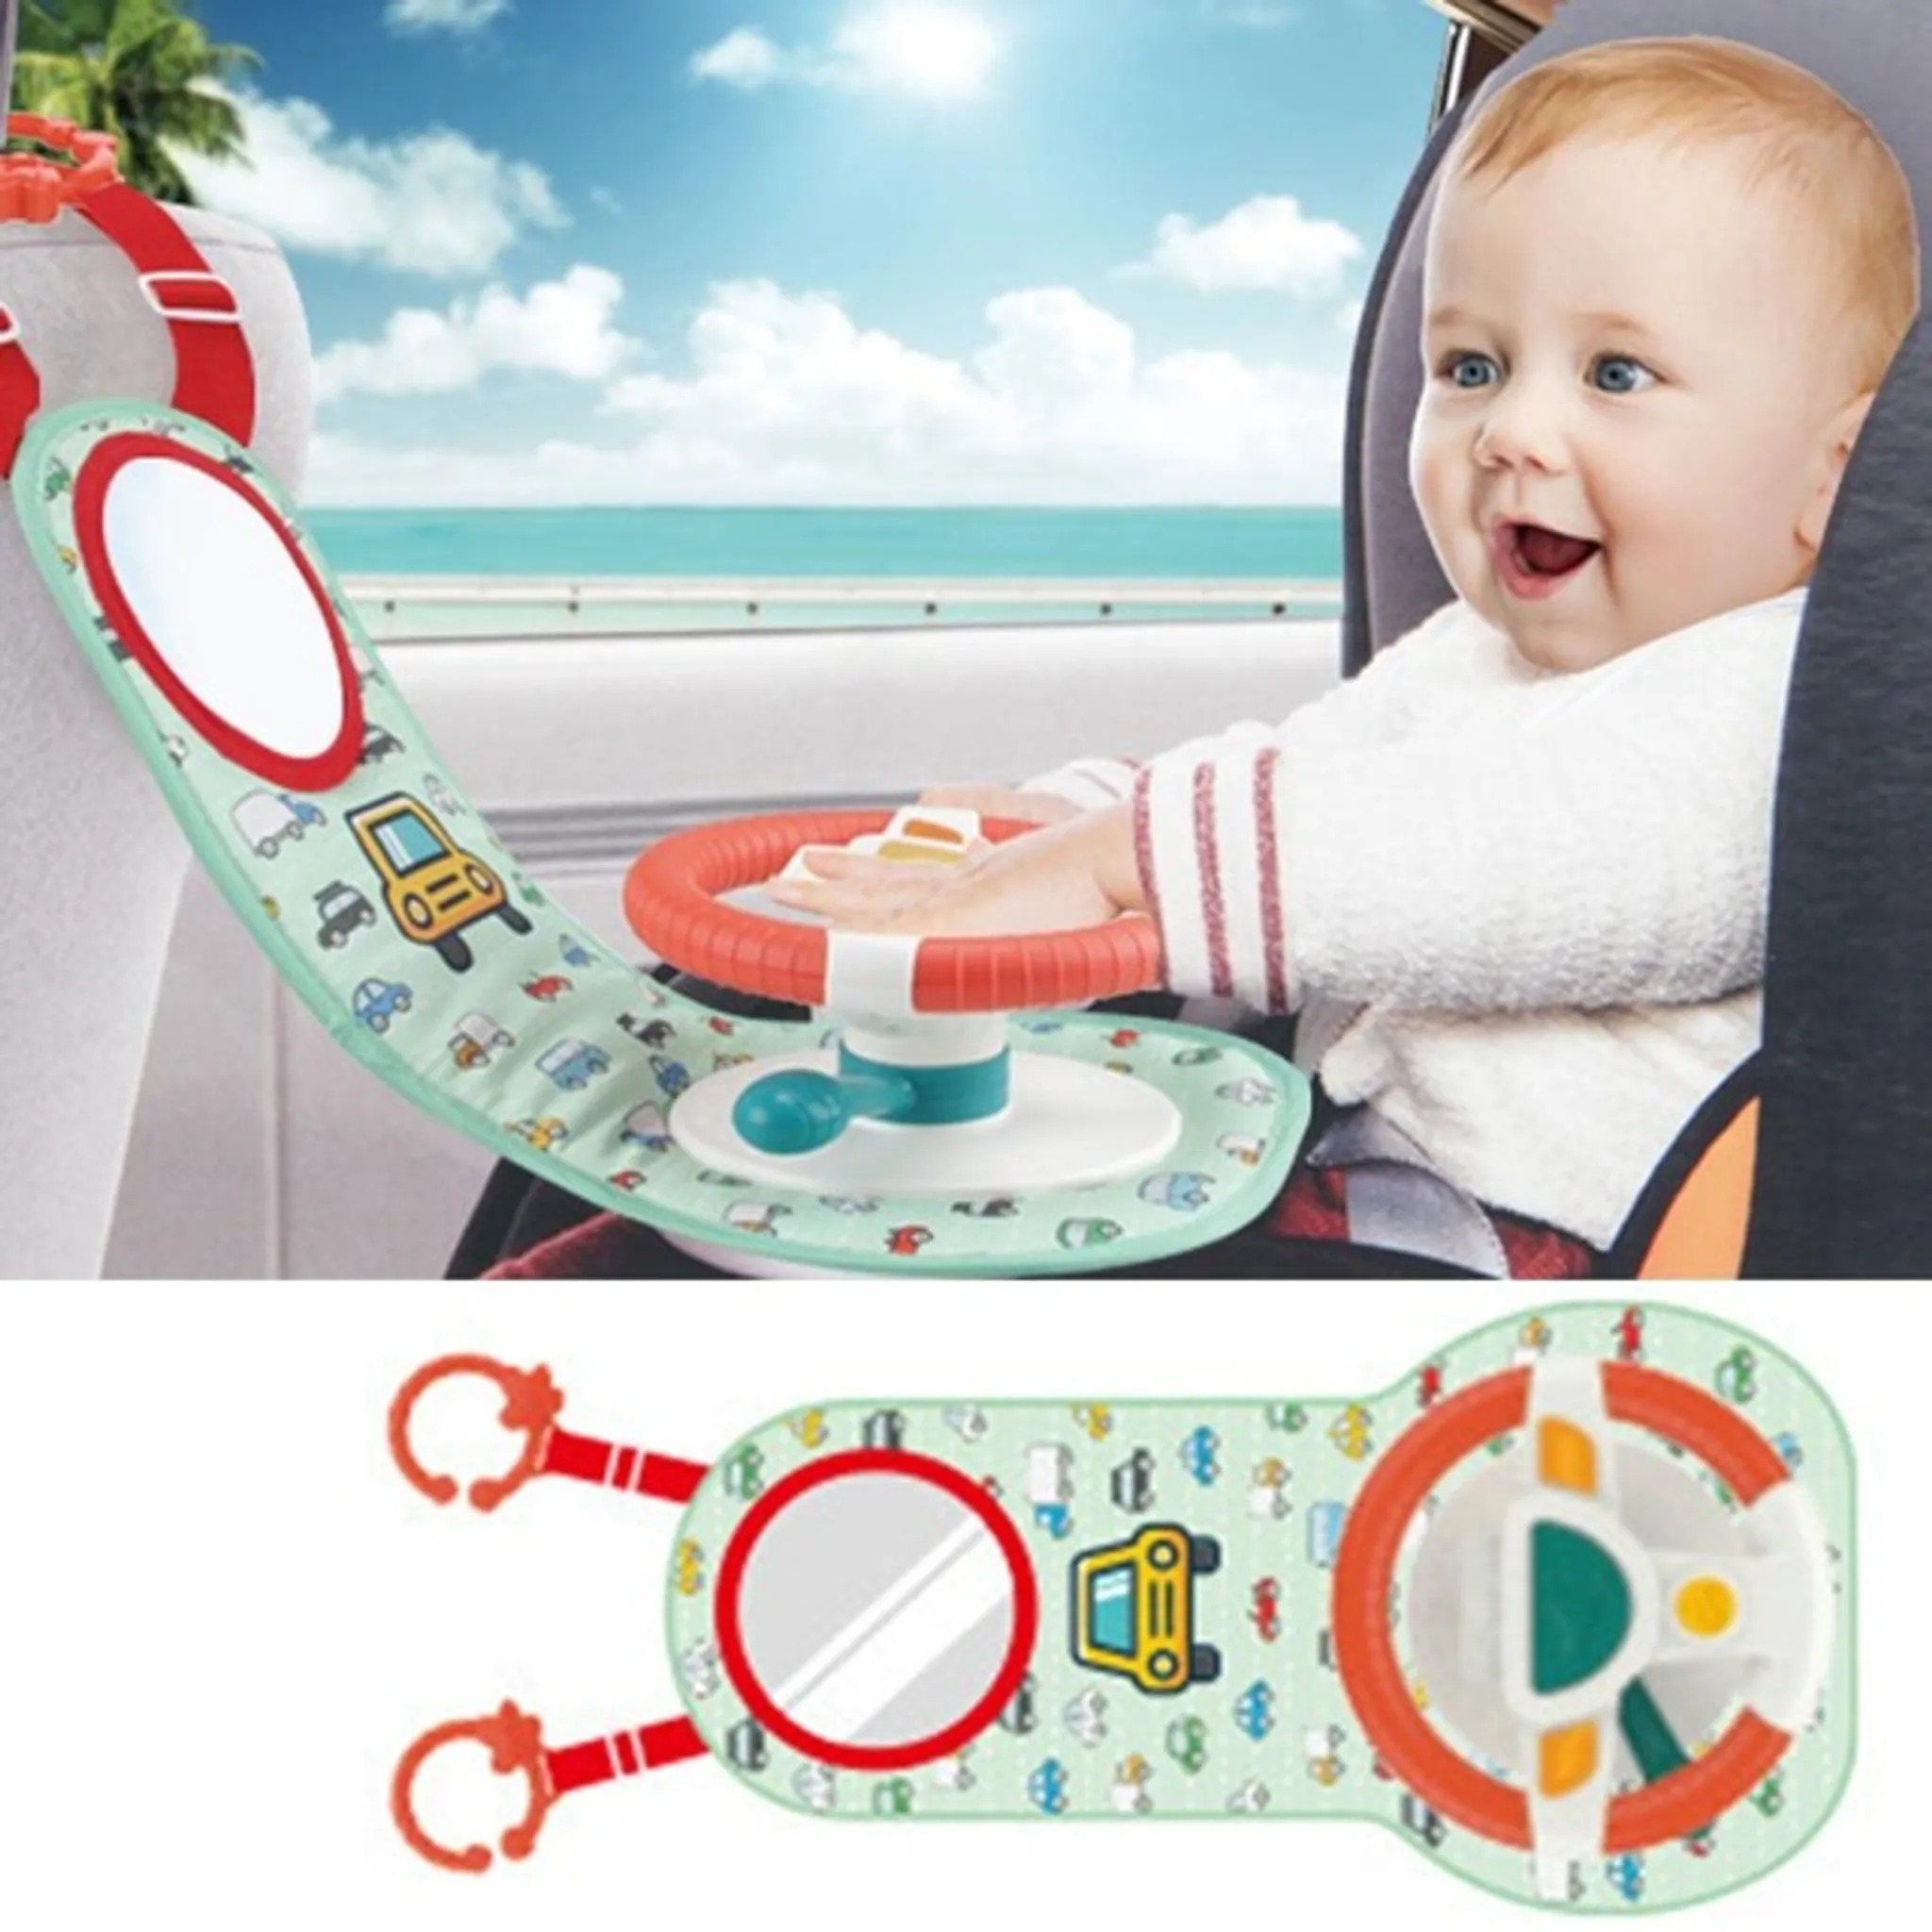 Auto Rückspiegel für Maxi Cosi Baby Sitz